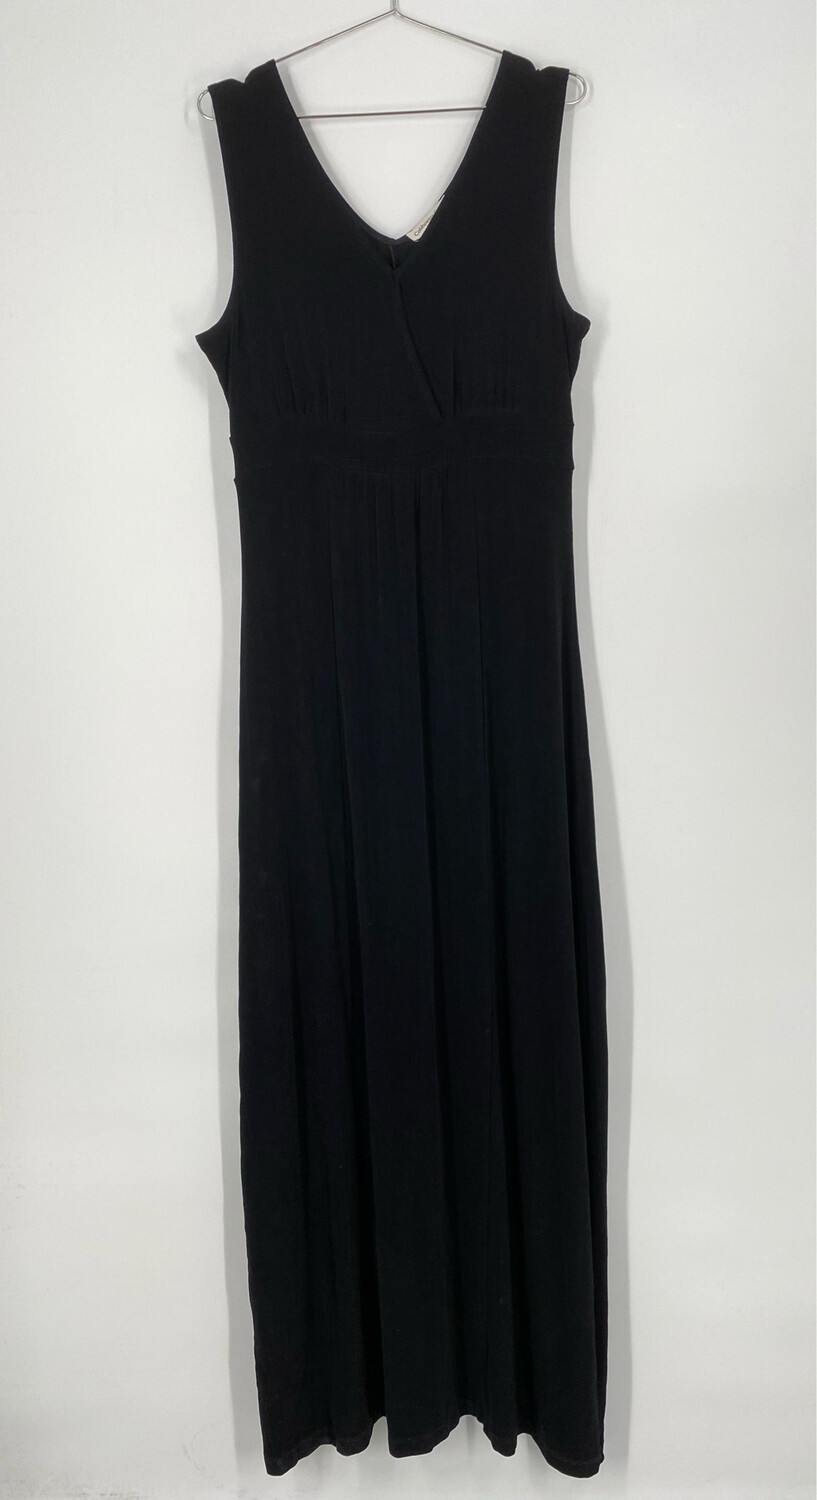 Coldwater Creek Sleeveless Maxi Dress Size L